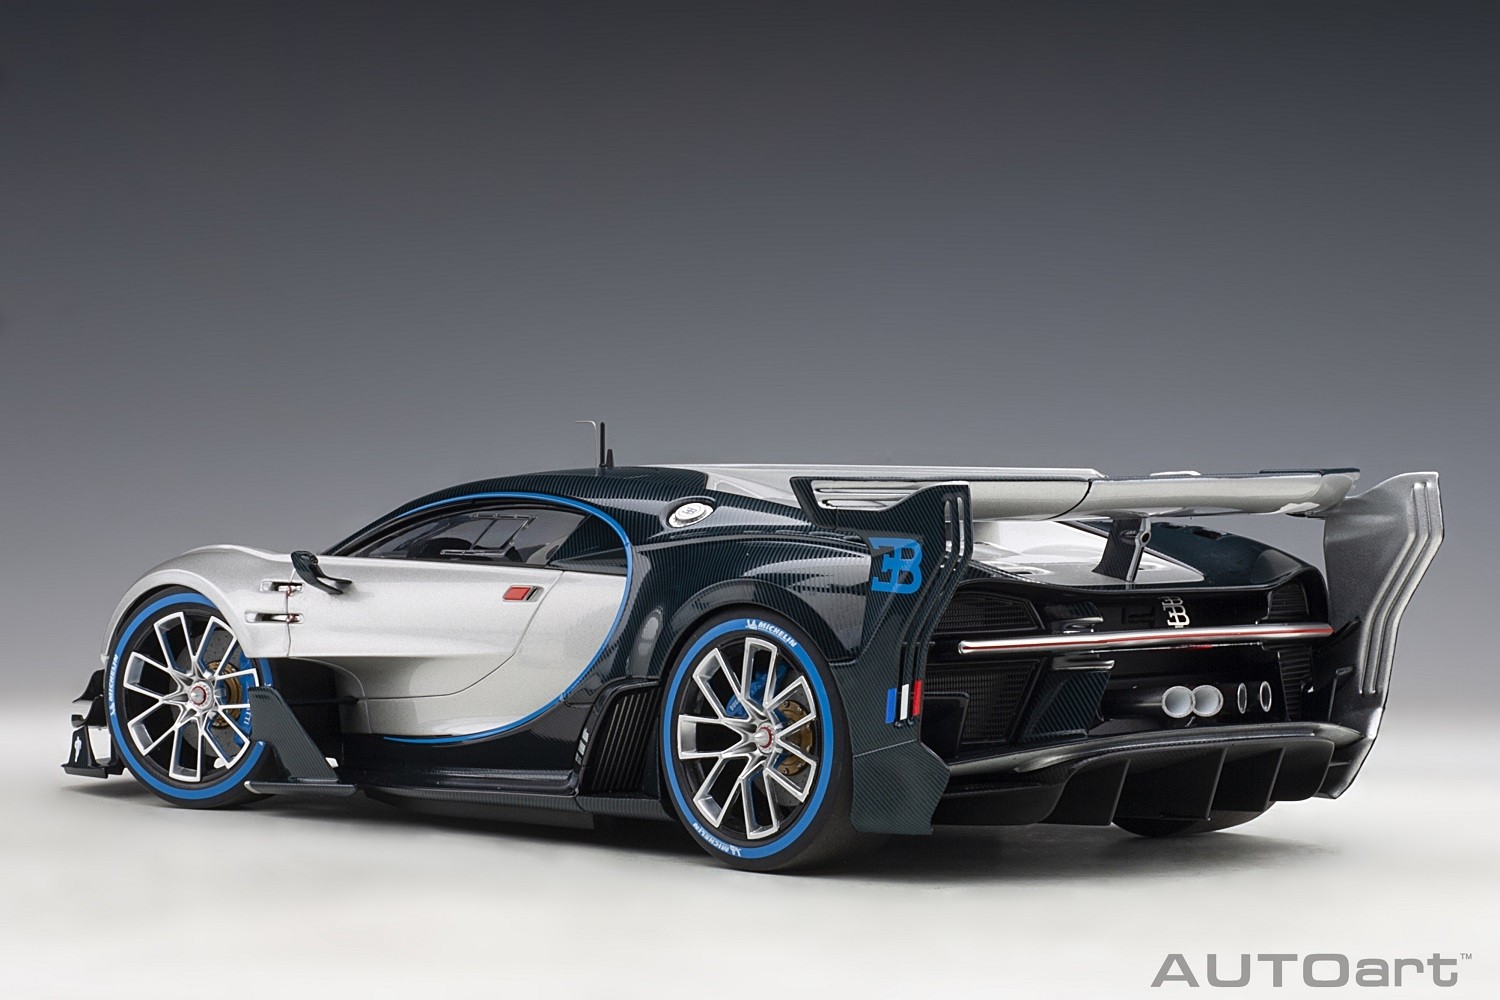 Silver-Blue Bugatti Vision Gran Turismo Models Collectibles AUTOart Diecast Argent ezToys - 1:18 scale and Silver/Blue Carbon Black 70987